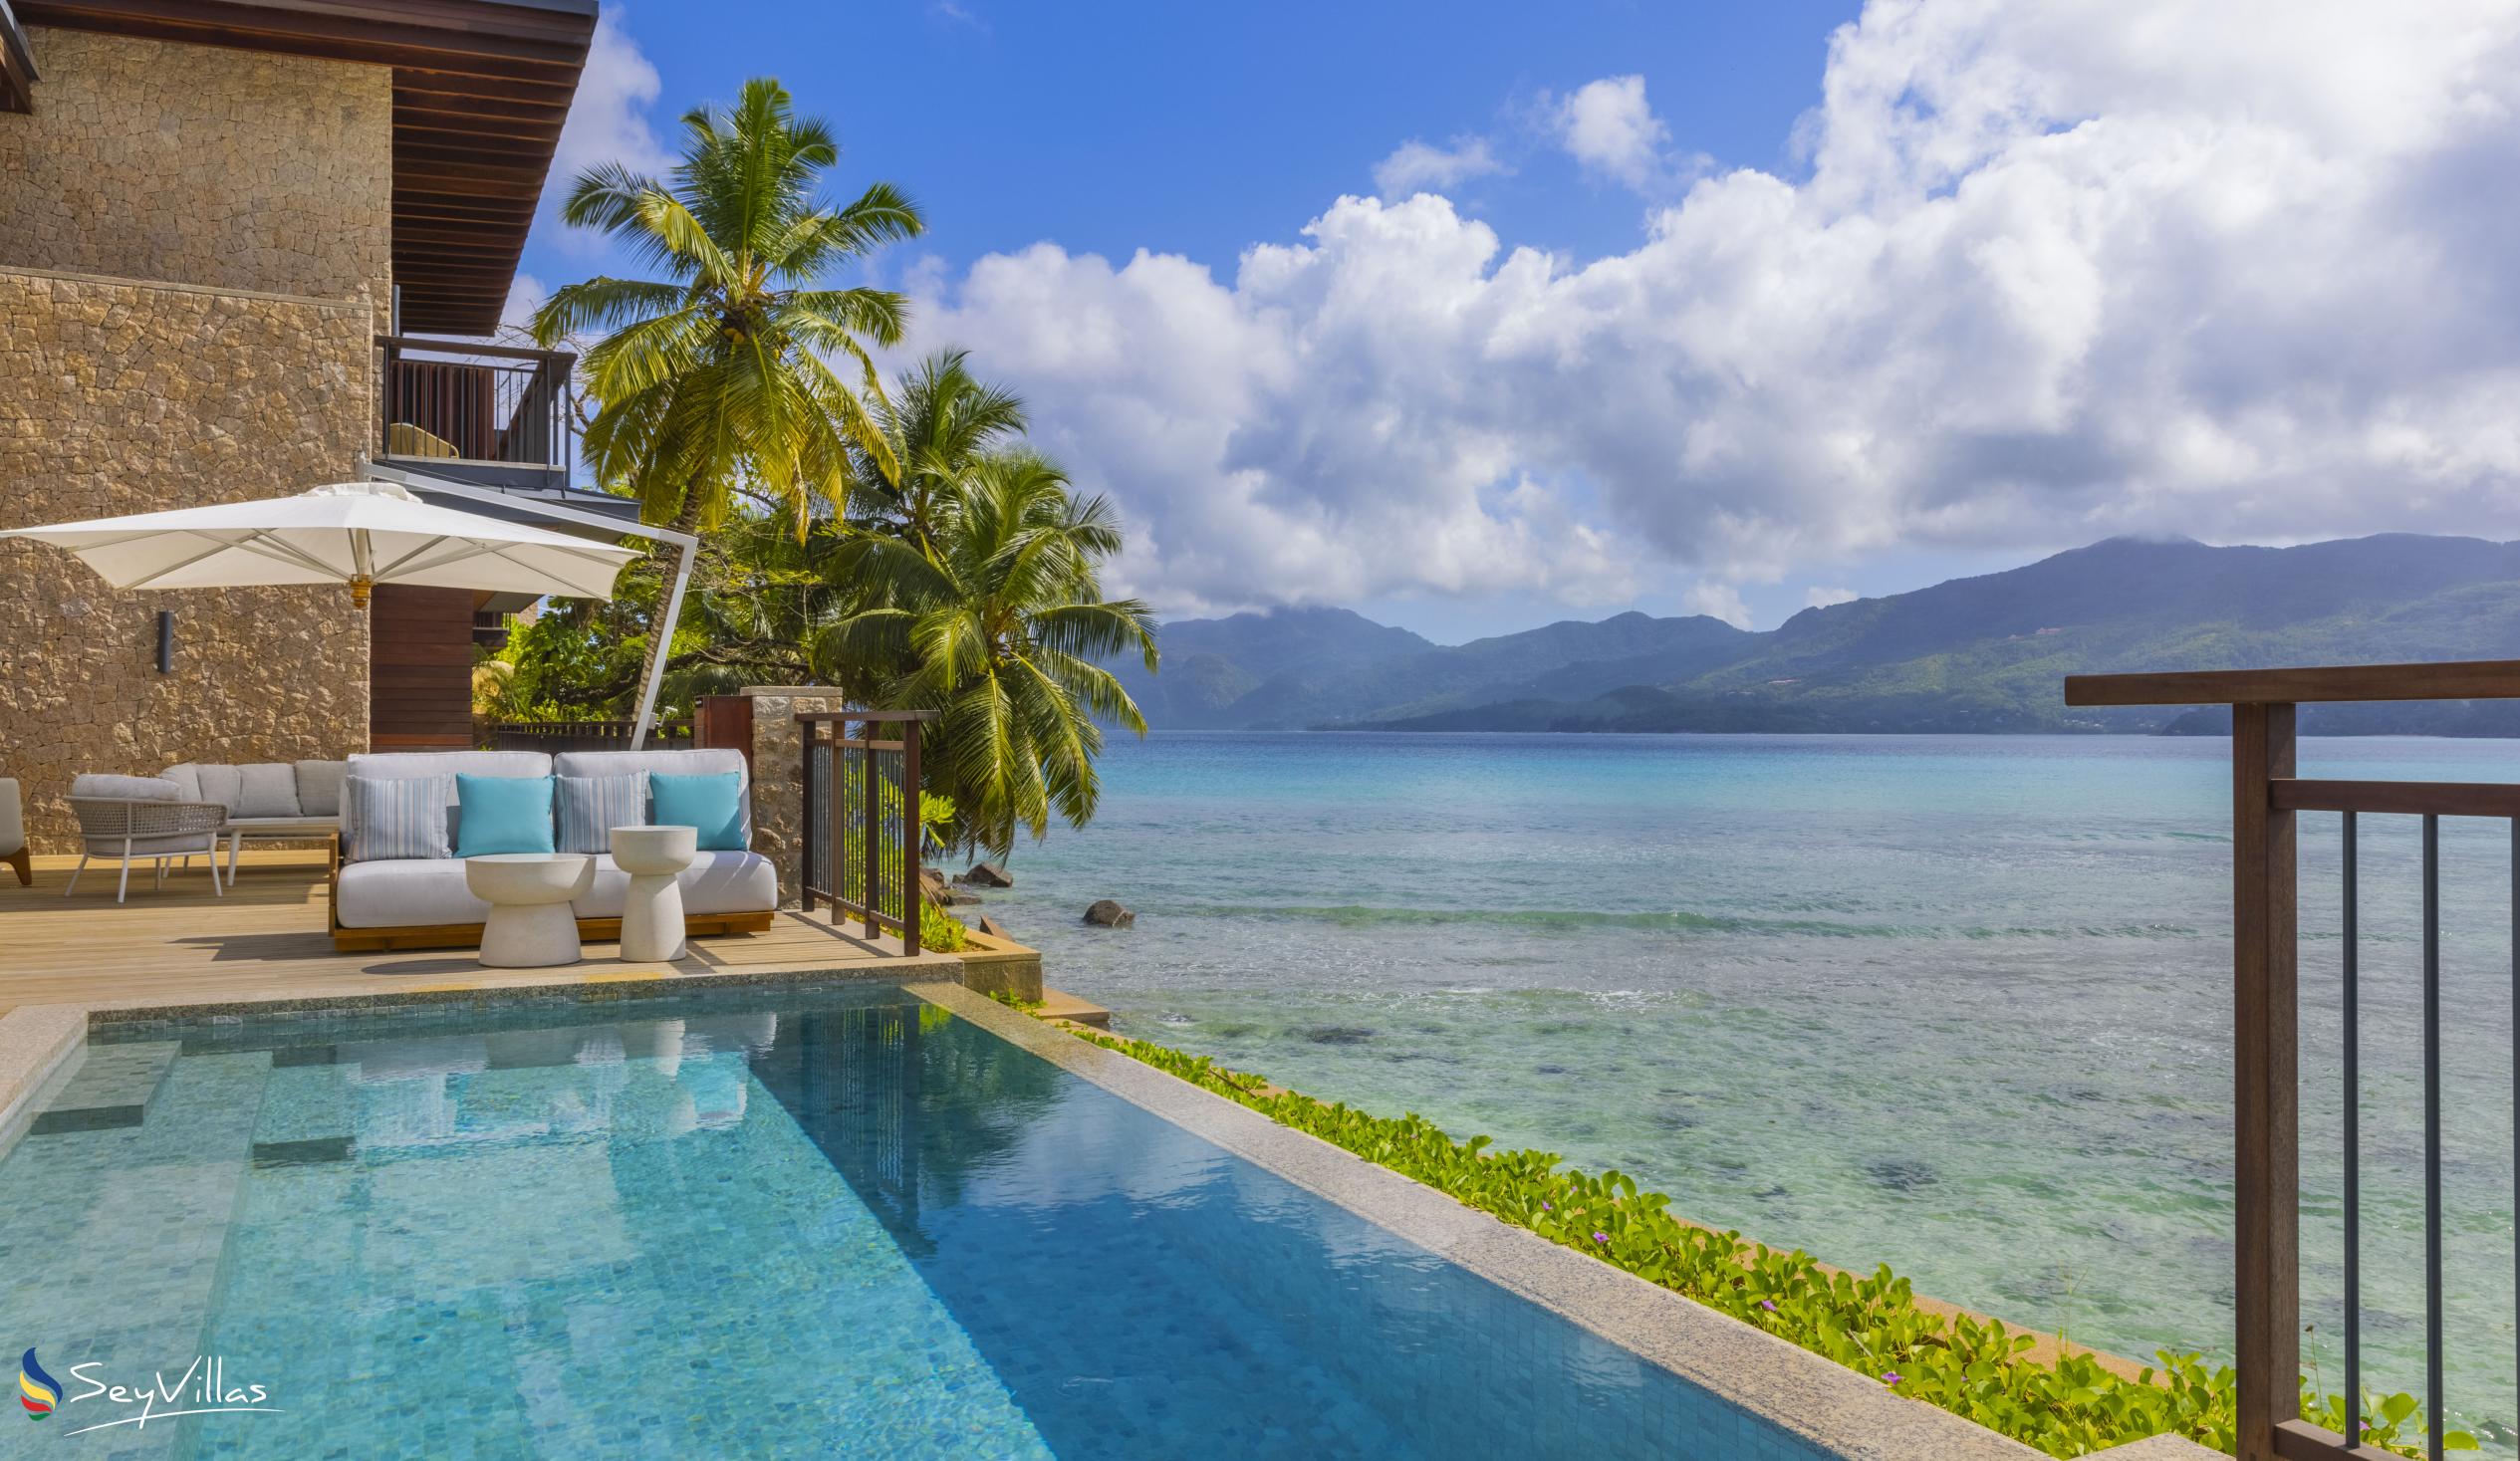 Photo 96: Mango House Seychelles, LXR Hotels & Resorts - Mahé (Seychelles)